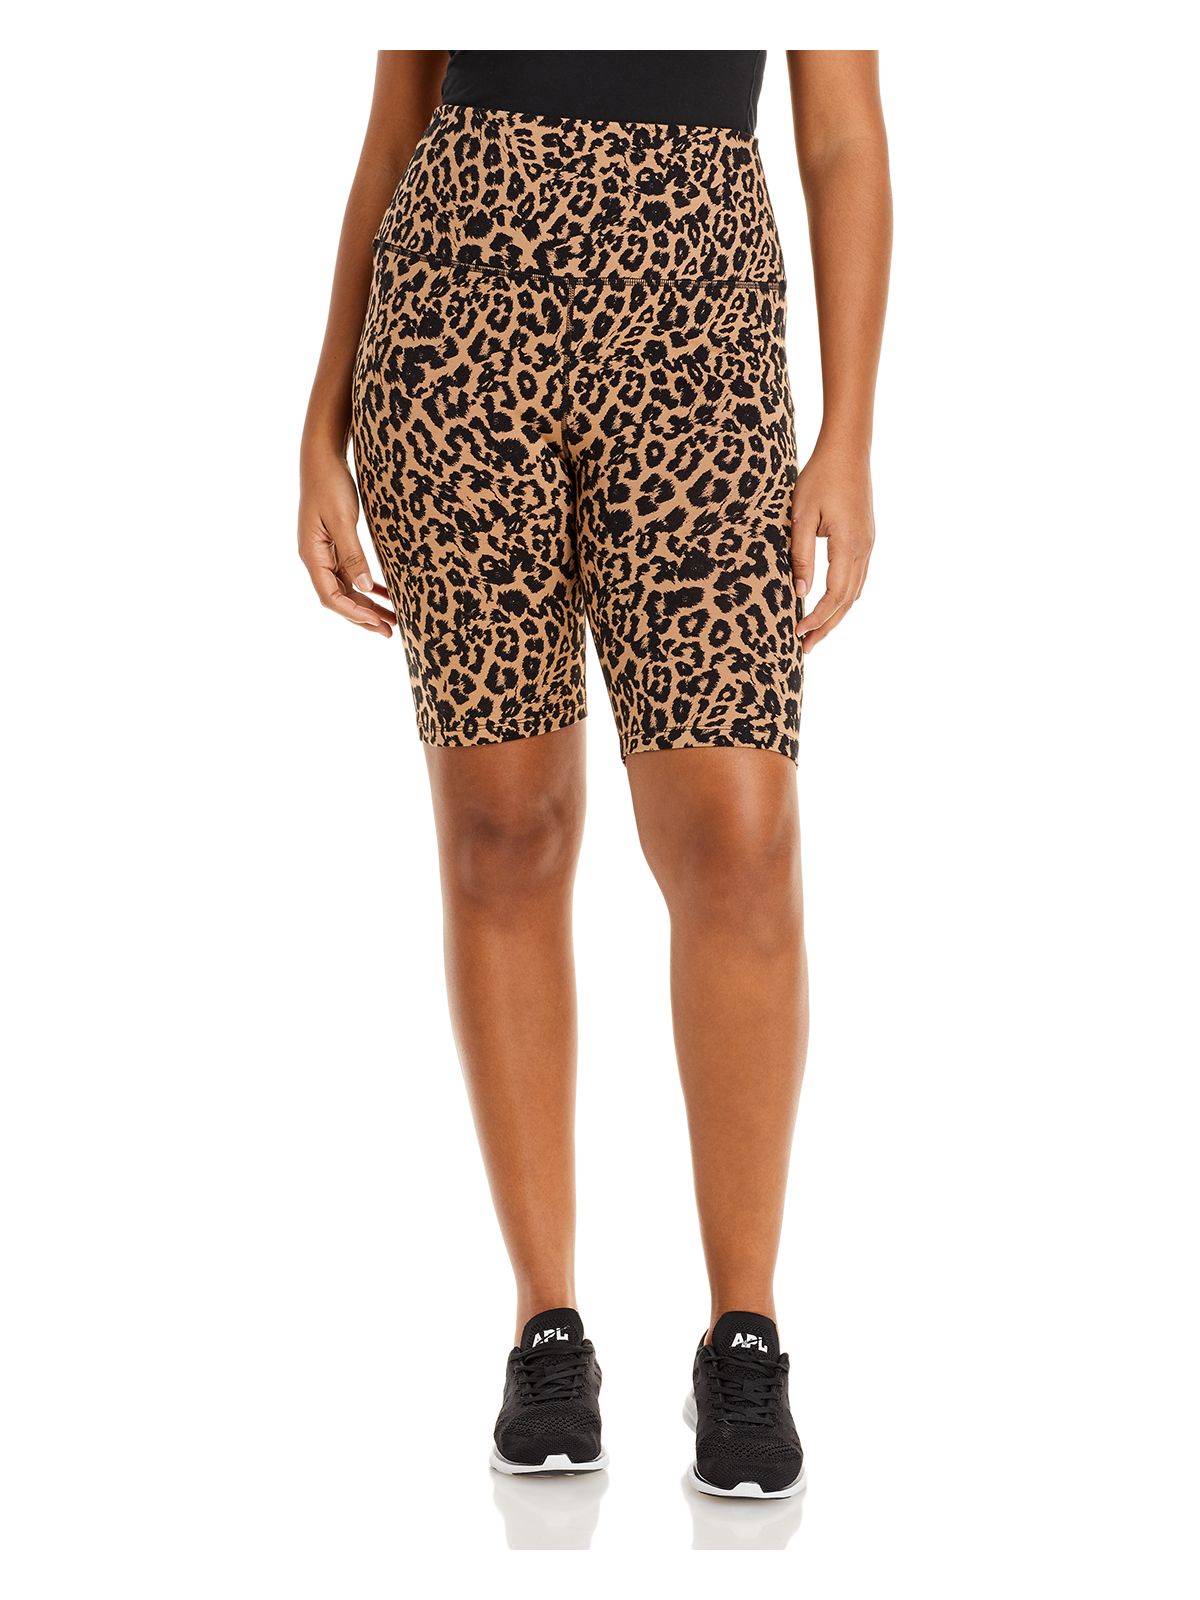 LNA CLOTHING Womens Beige Animal Print Active Wear High Waist Shorts Plus 2X